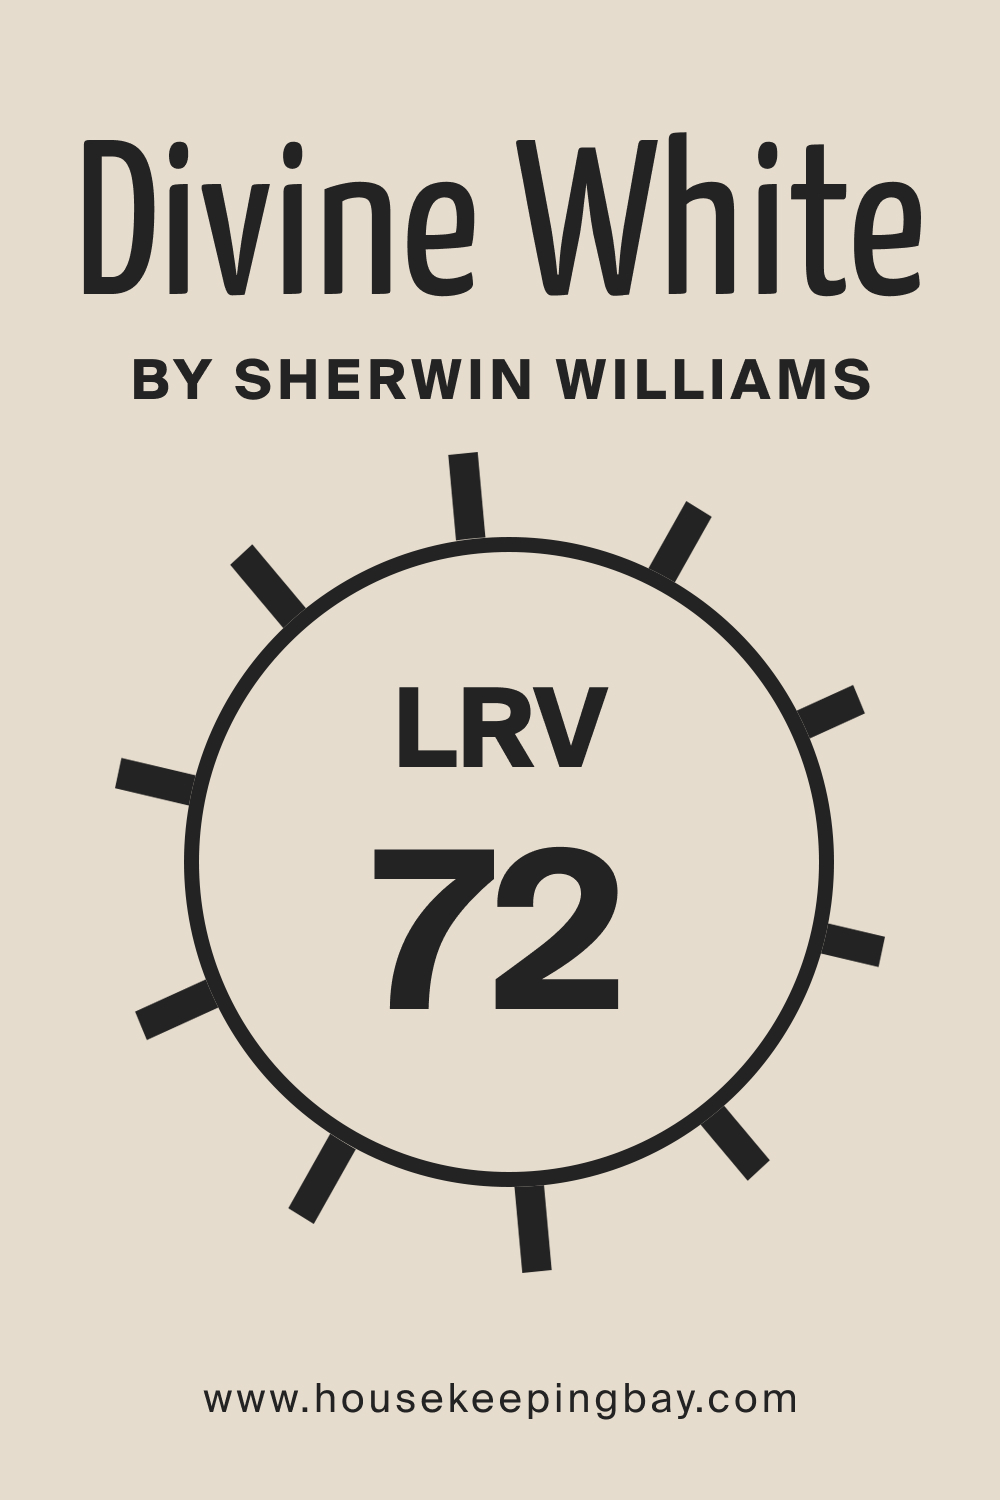 SW Divine White by Sherwin Williams. LRV – 72